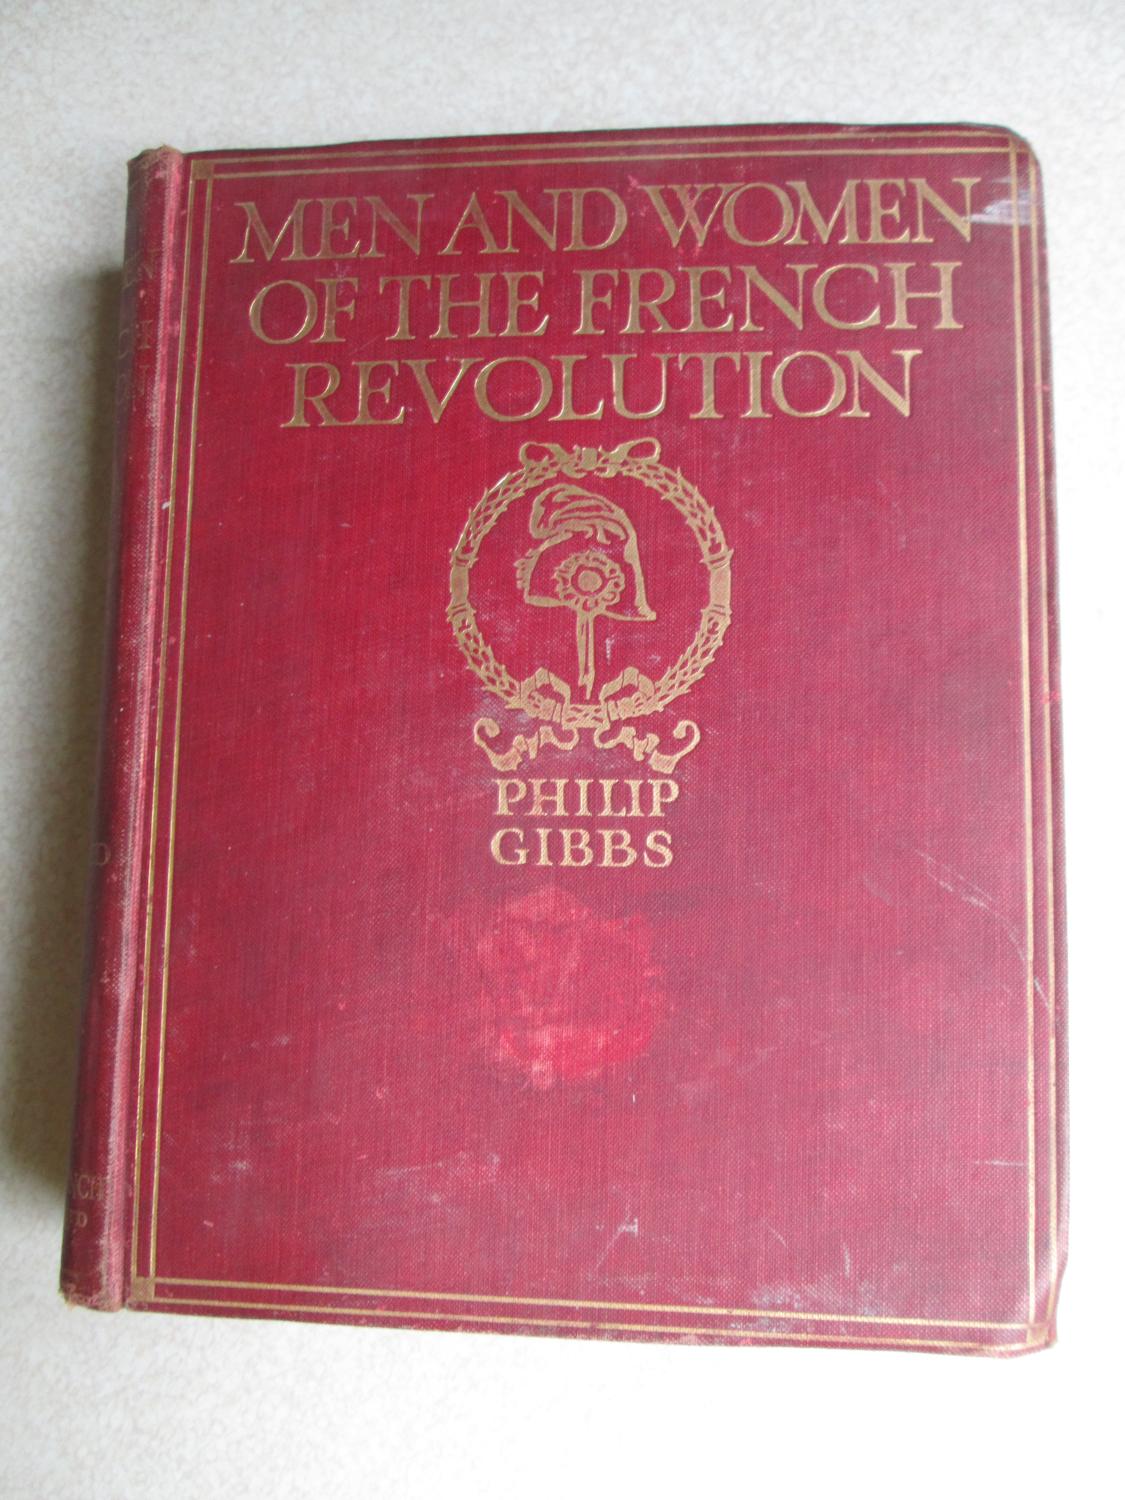 Men And Women of the French Revolution - Philip Gibbs